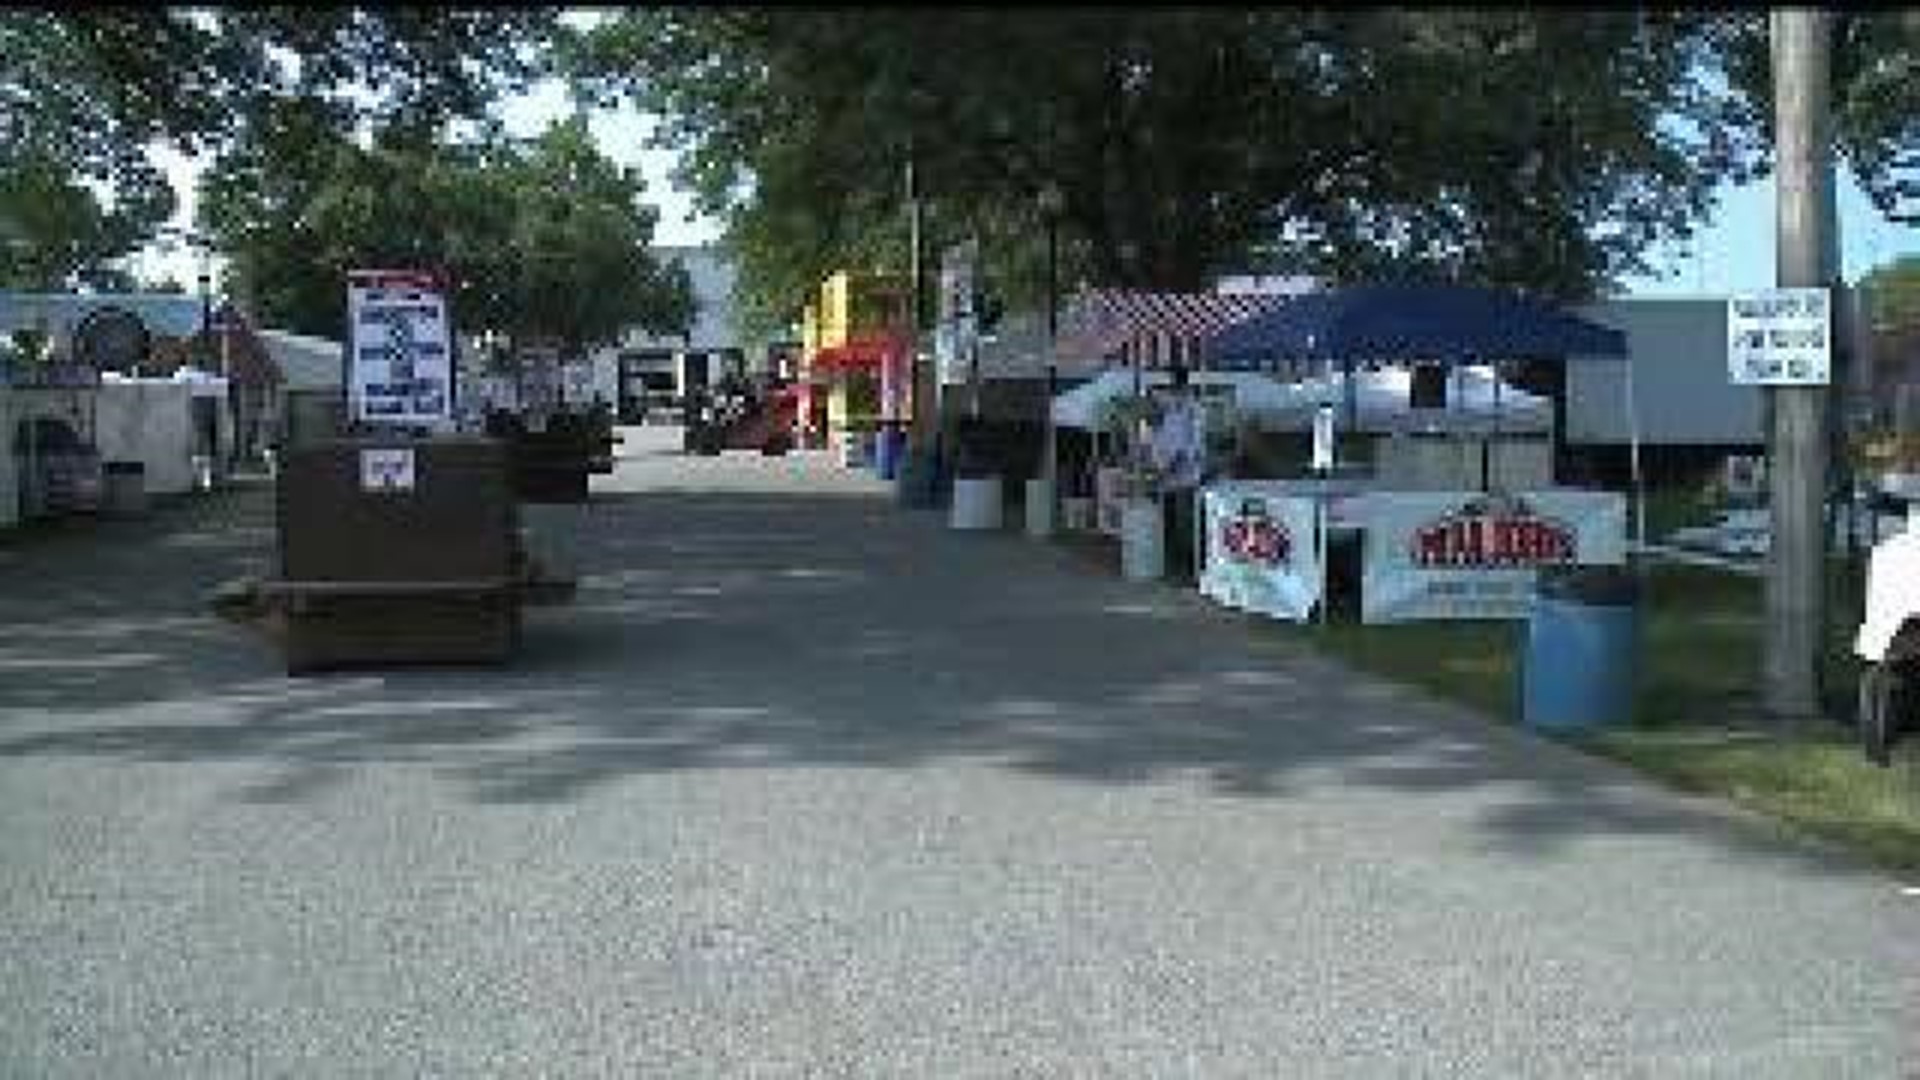 Mississippi Valley Fair starts up